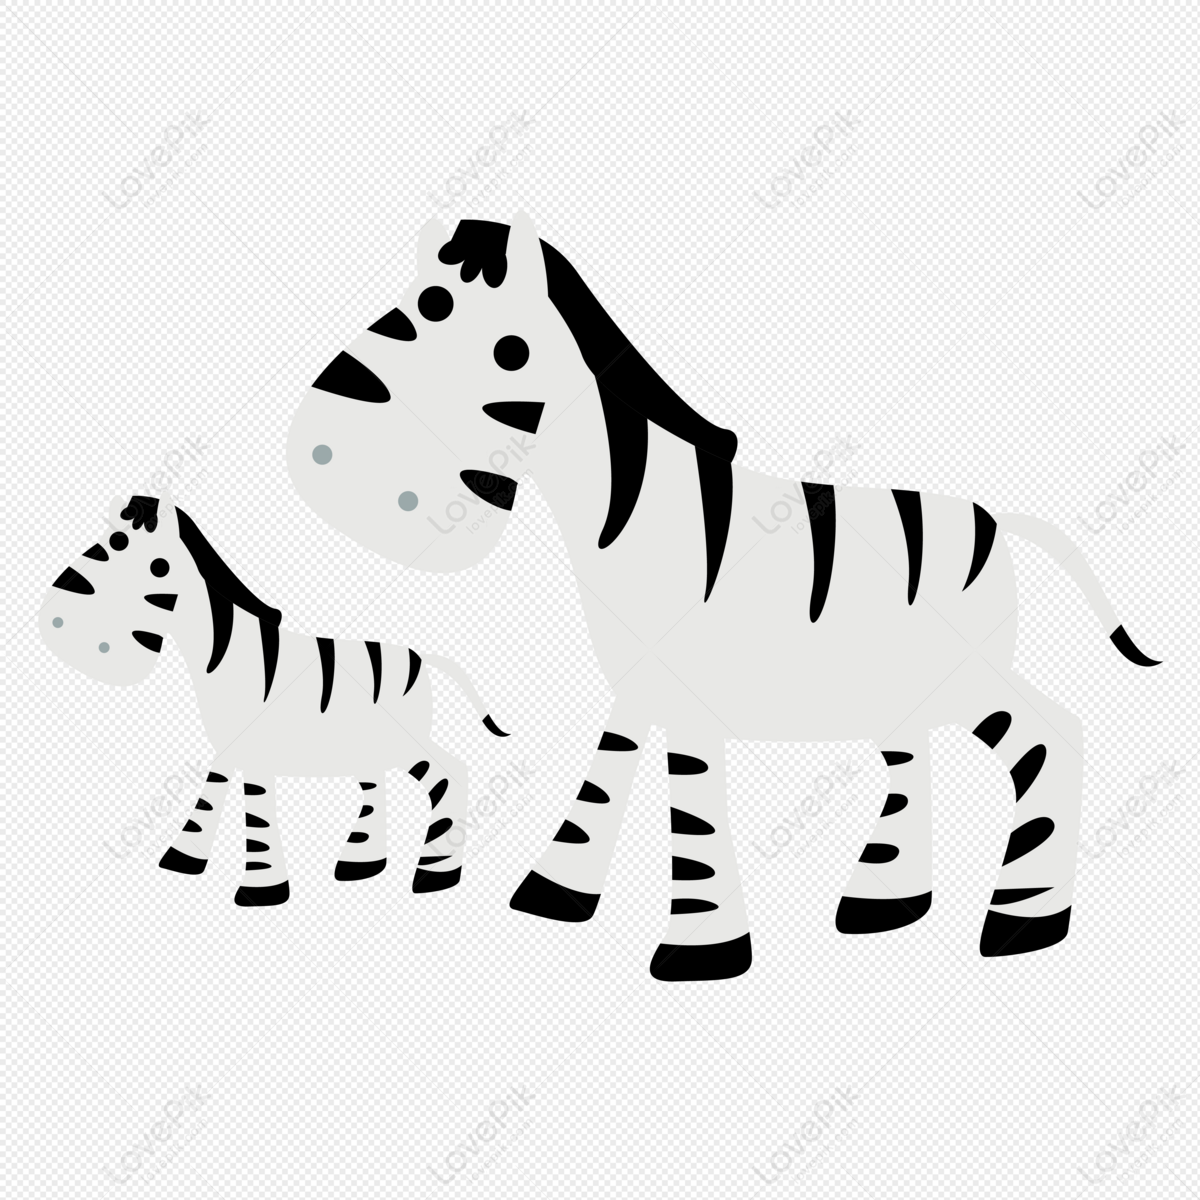 Zebra Animal Cartoon Zebra PNG Hd Transparent Image And Clipart Image For  Free Download - Lovepik | 401422774